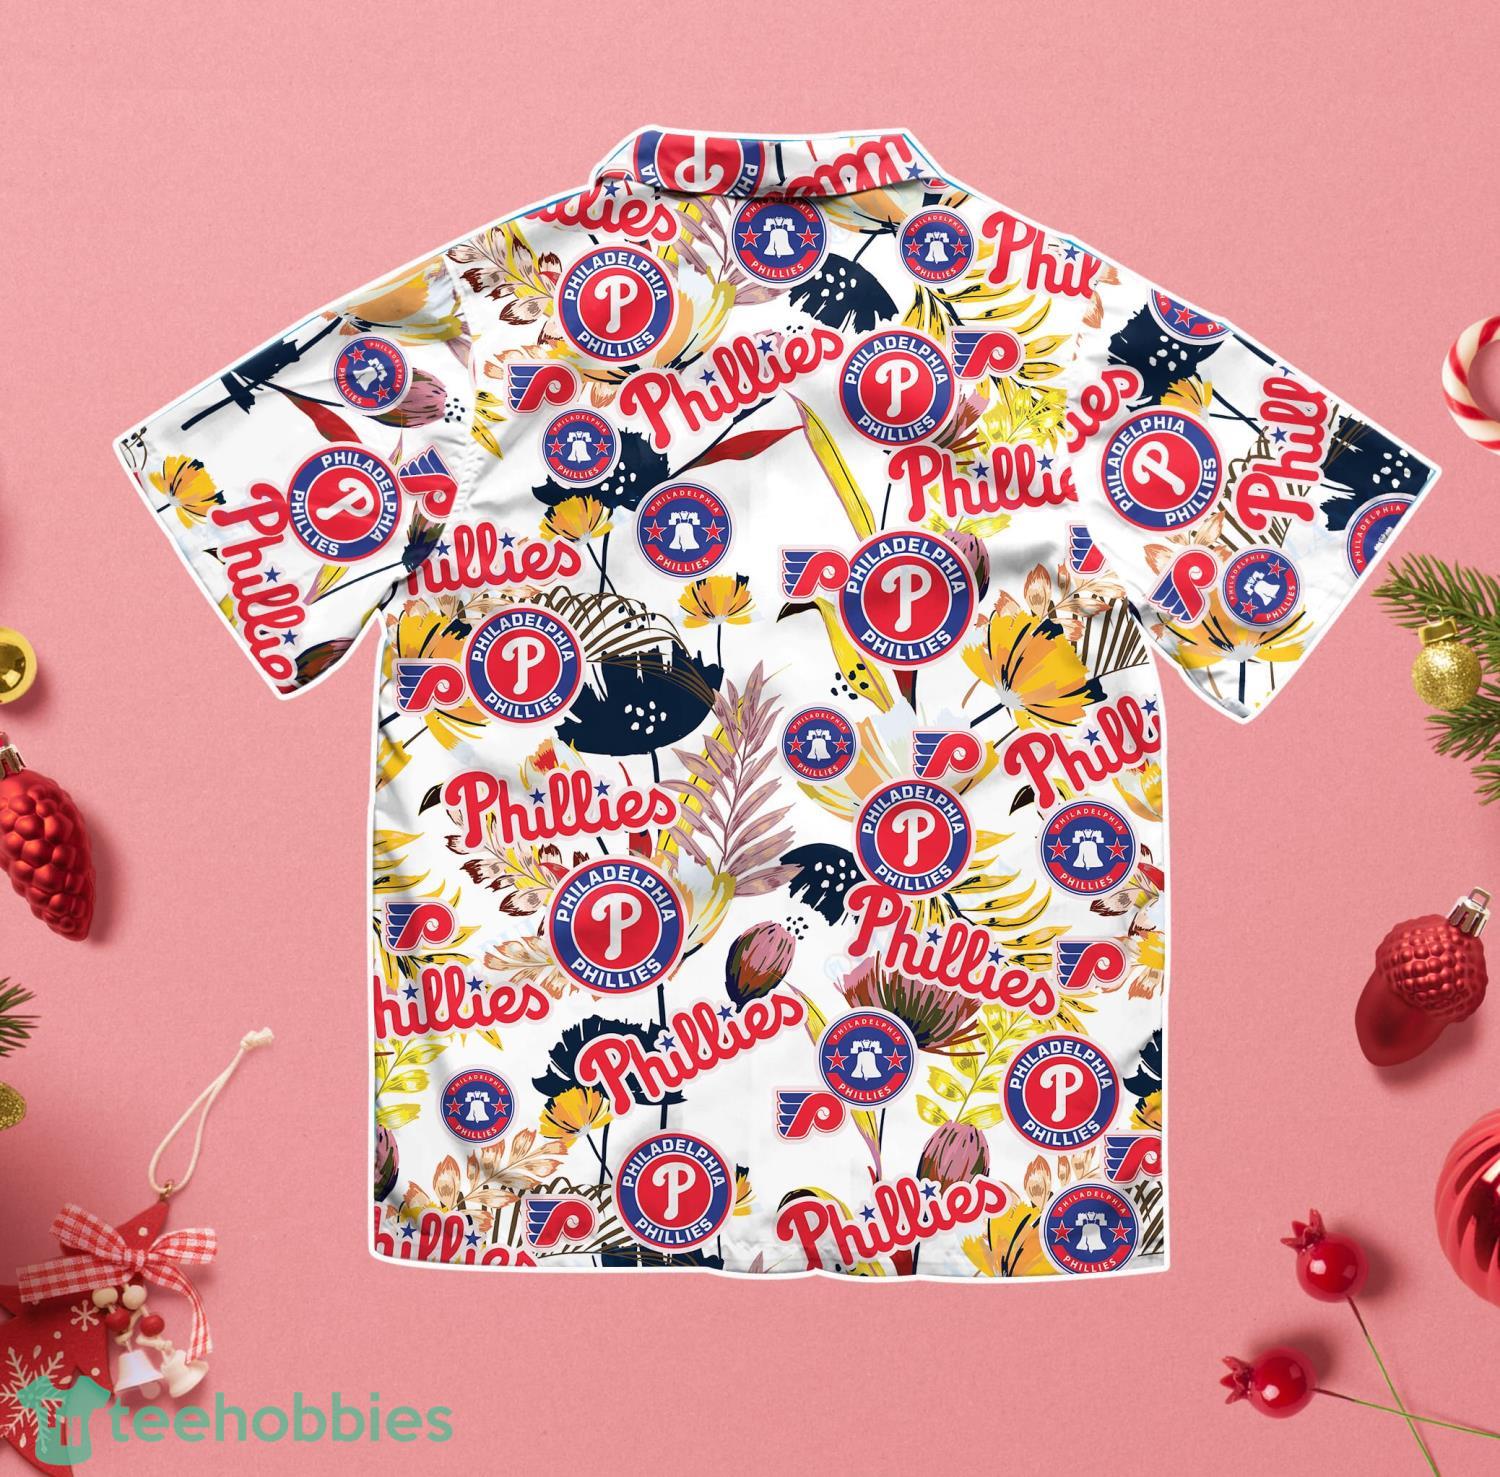 Philadelphia Phillies shirt, Hawaiian shirt, aloha cute summer